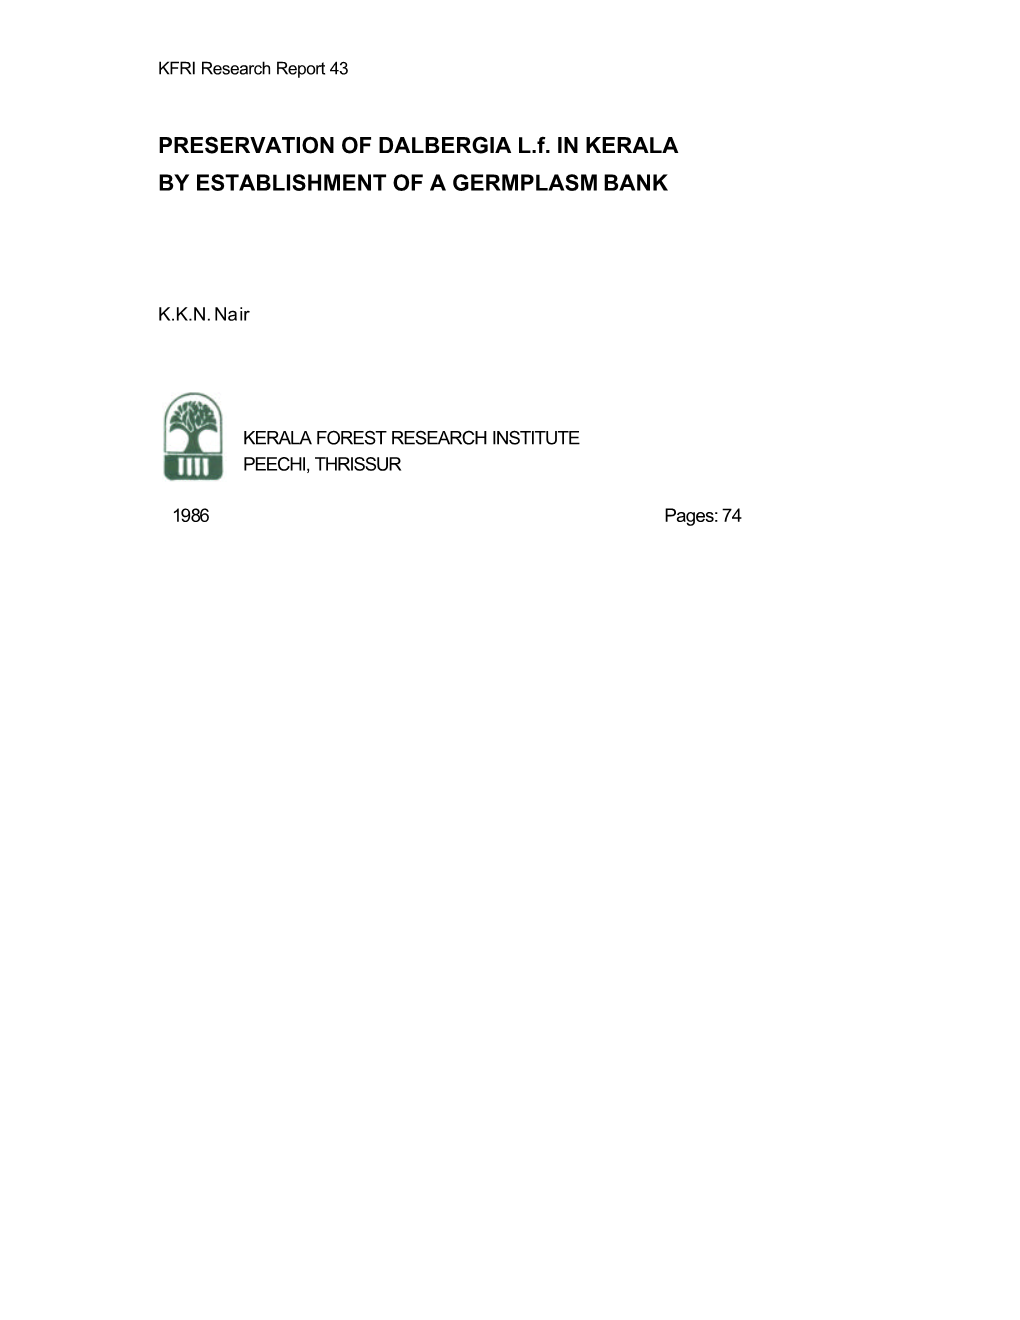 PRESERVATION of DALBERGIA L.F. in KERALA by ESTABLISHMENT of a GERMPLASM BANK